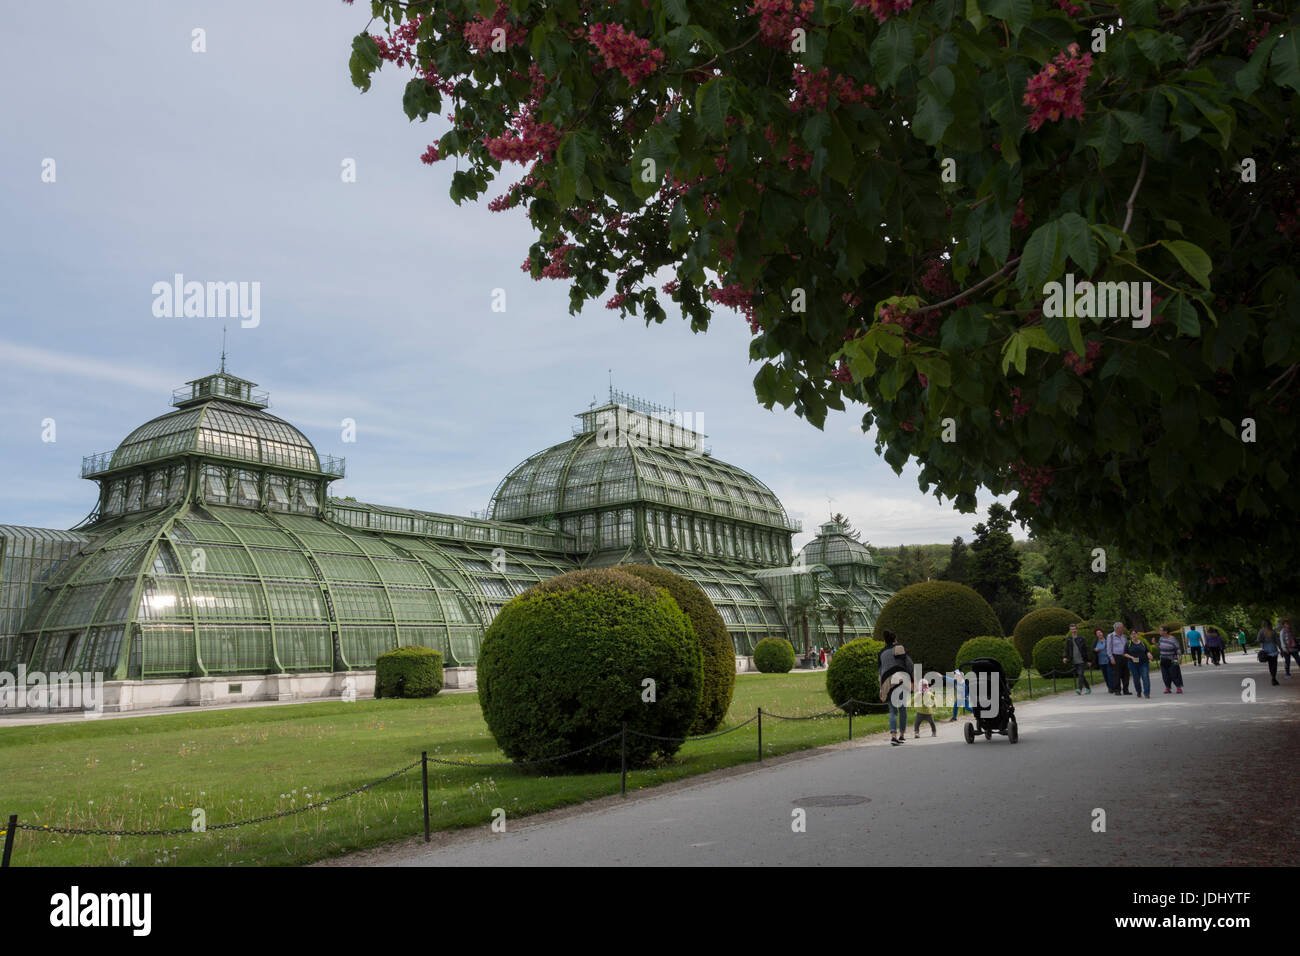 Austria. Vienna. The Palm pavilion in W part of the gardens of Schönbrunn Palace Stock Photo